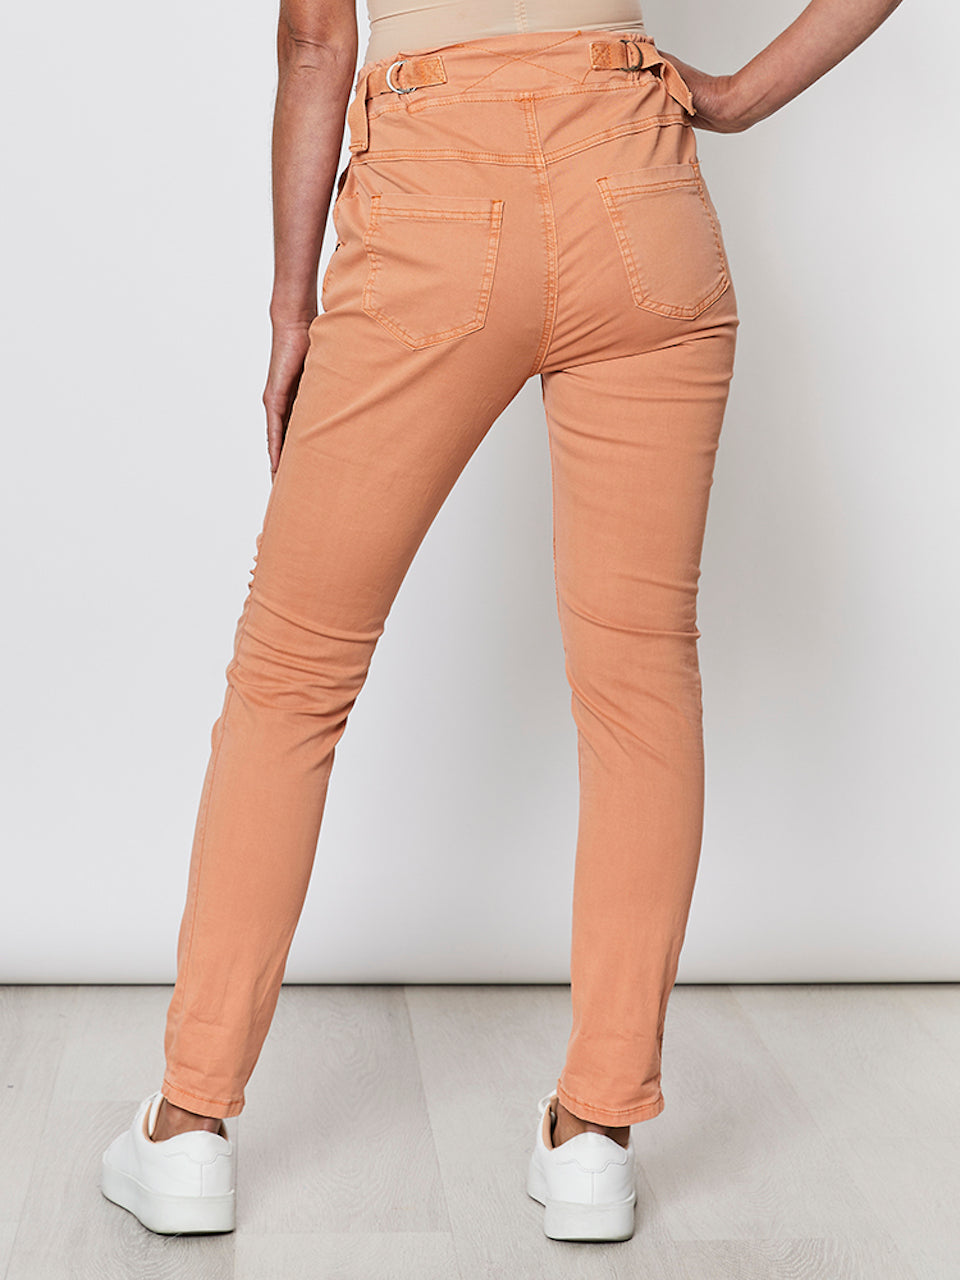 Cotton Jogger Stretch Jean - Orange/Khaki